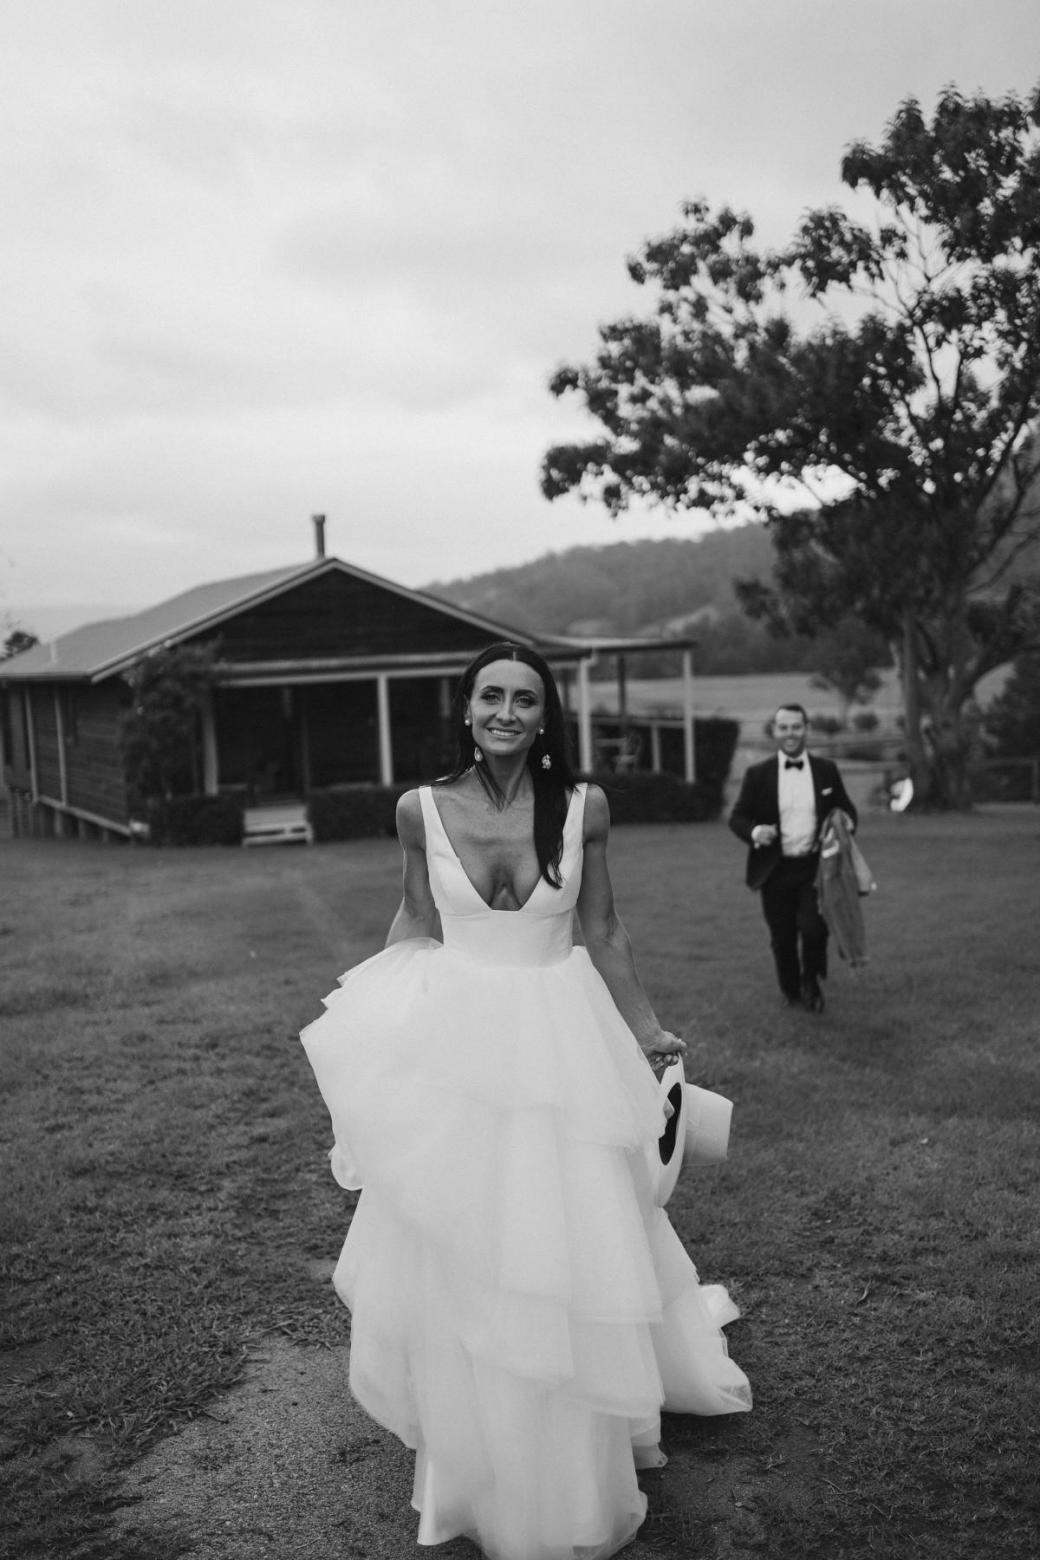 Real bride Sarah wears the Taryn Marina gown, a Bespoke wedding dress by Karen Willis Holmes.